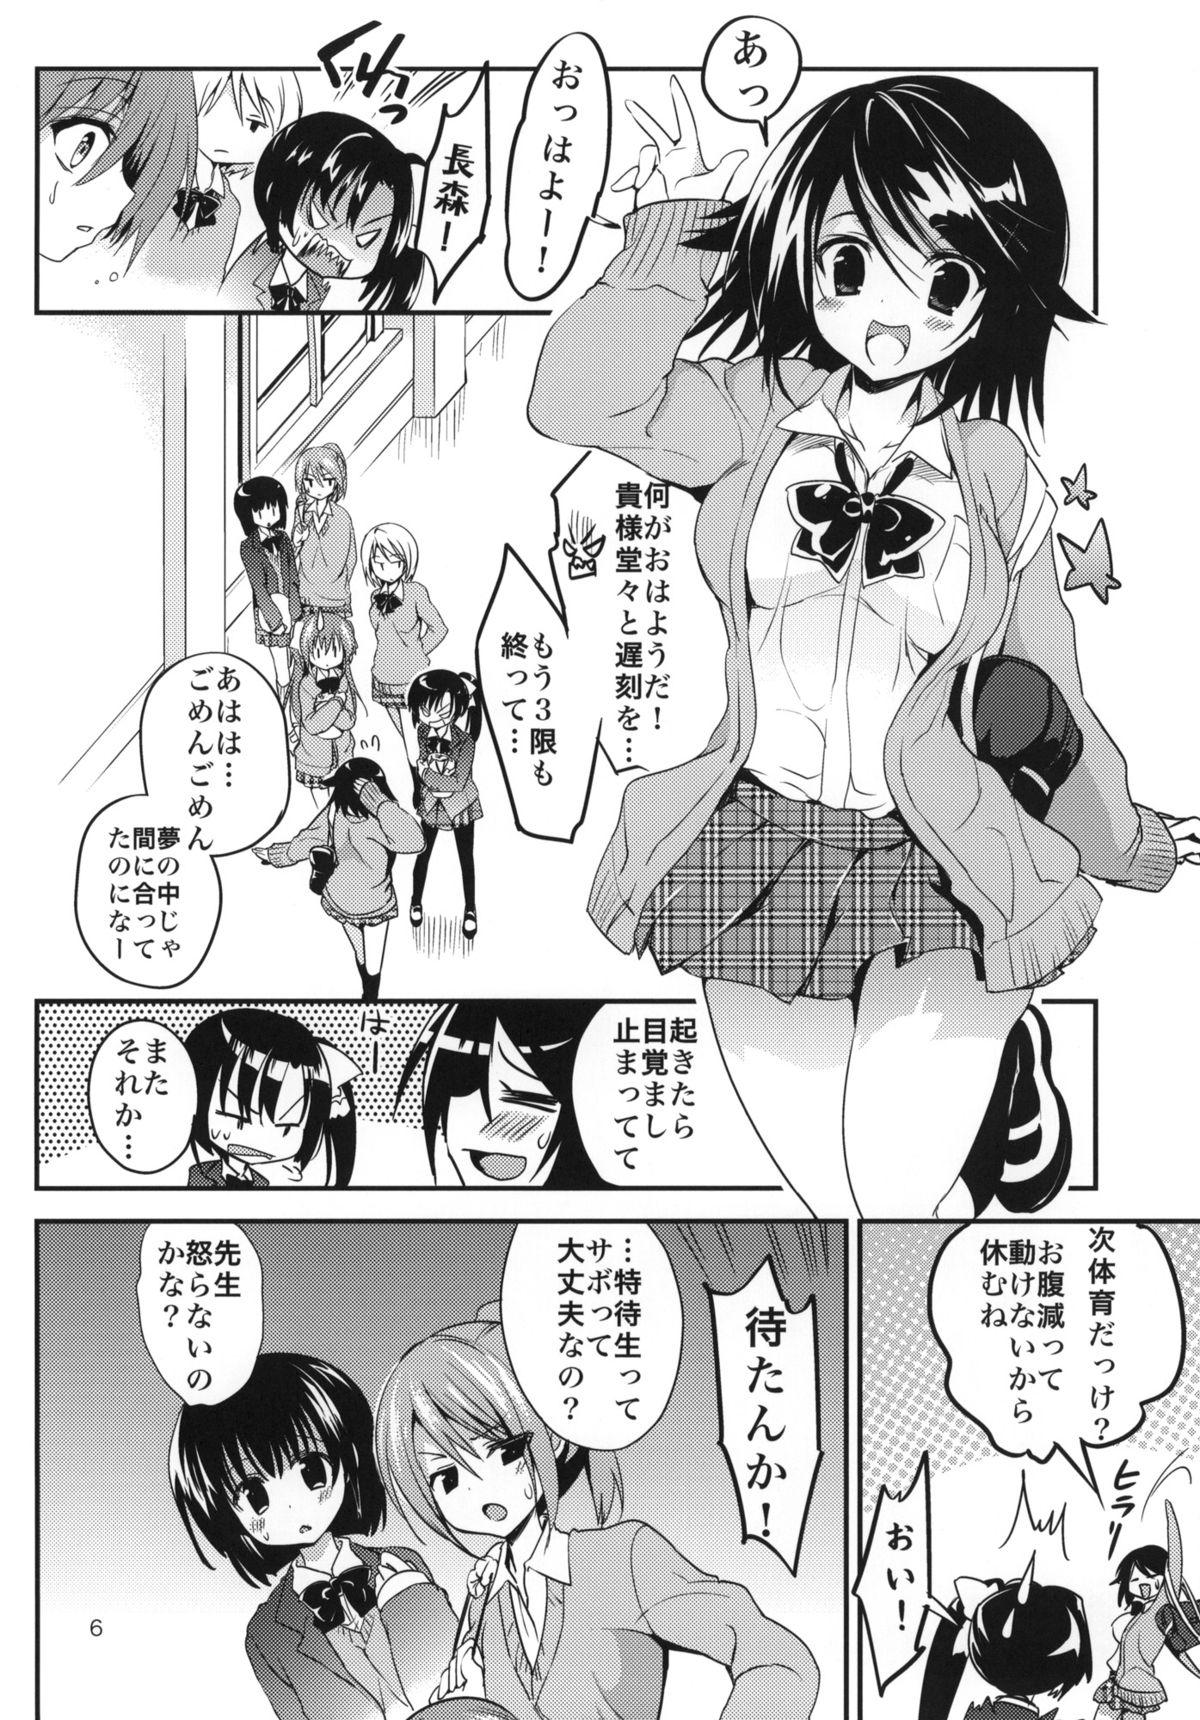 Periscope Gakkou de Seishun! 7 Action - Page 5